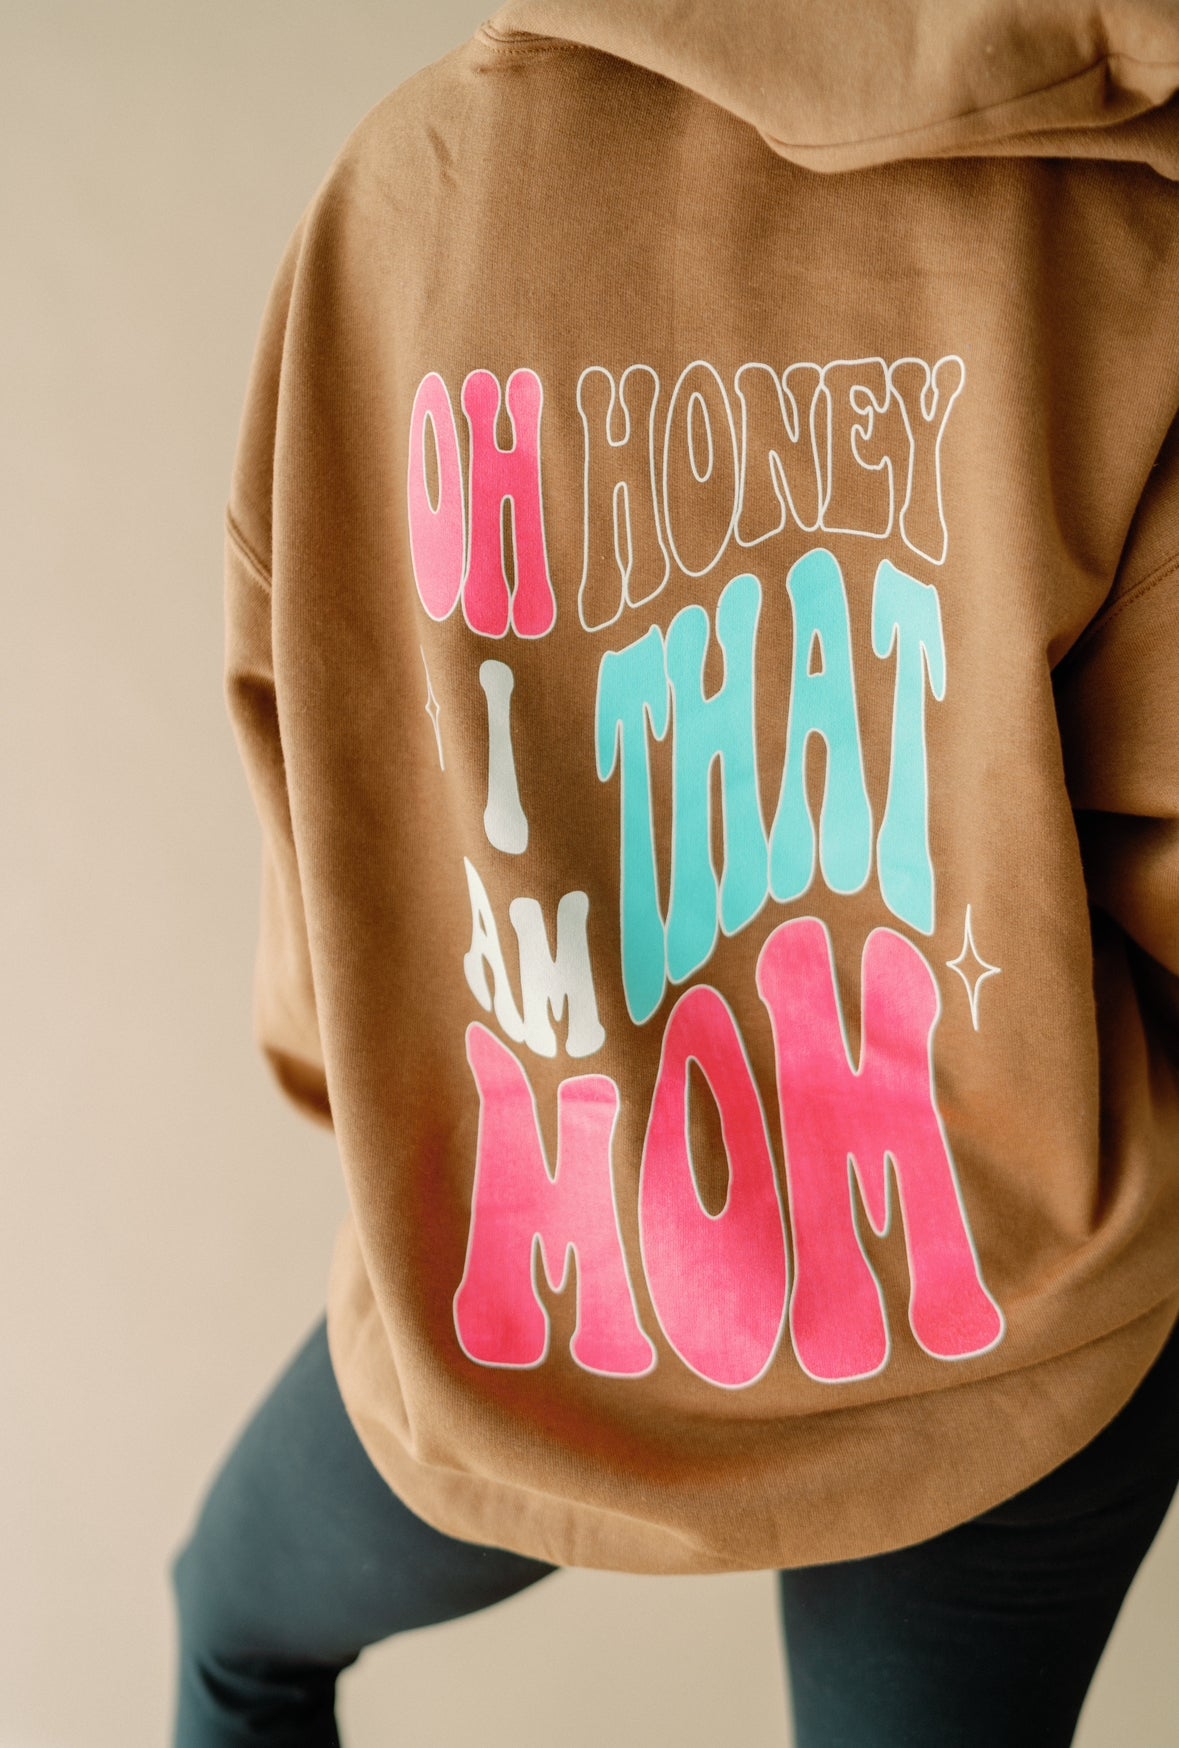 That mom hoodie